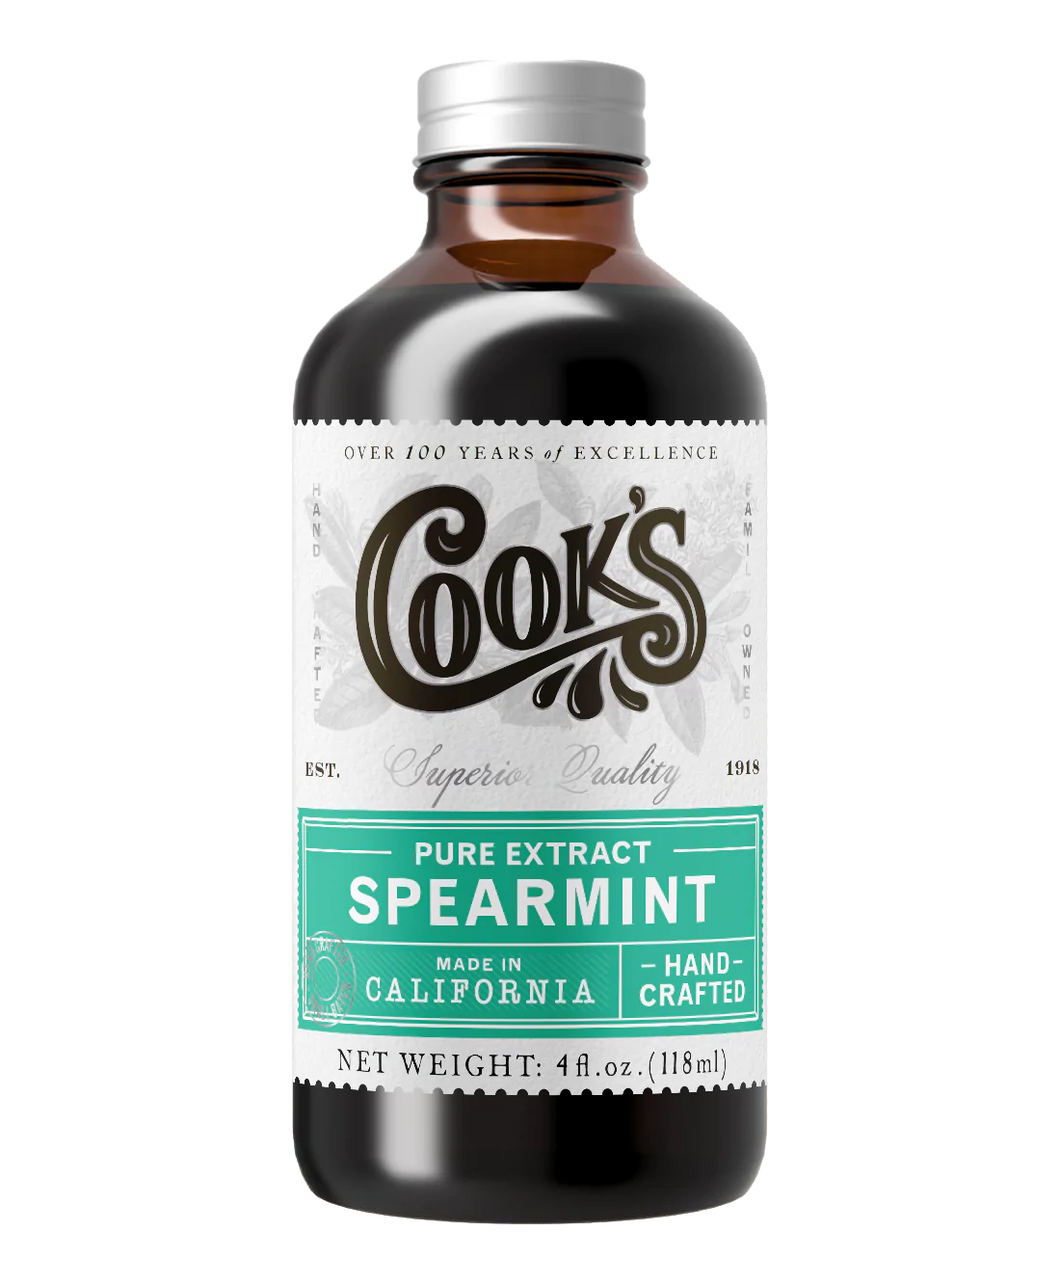 Cooks Spearmint Extract 4oz